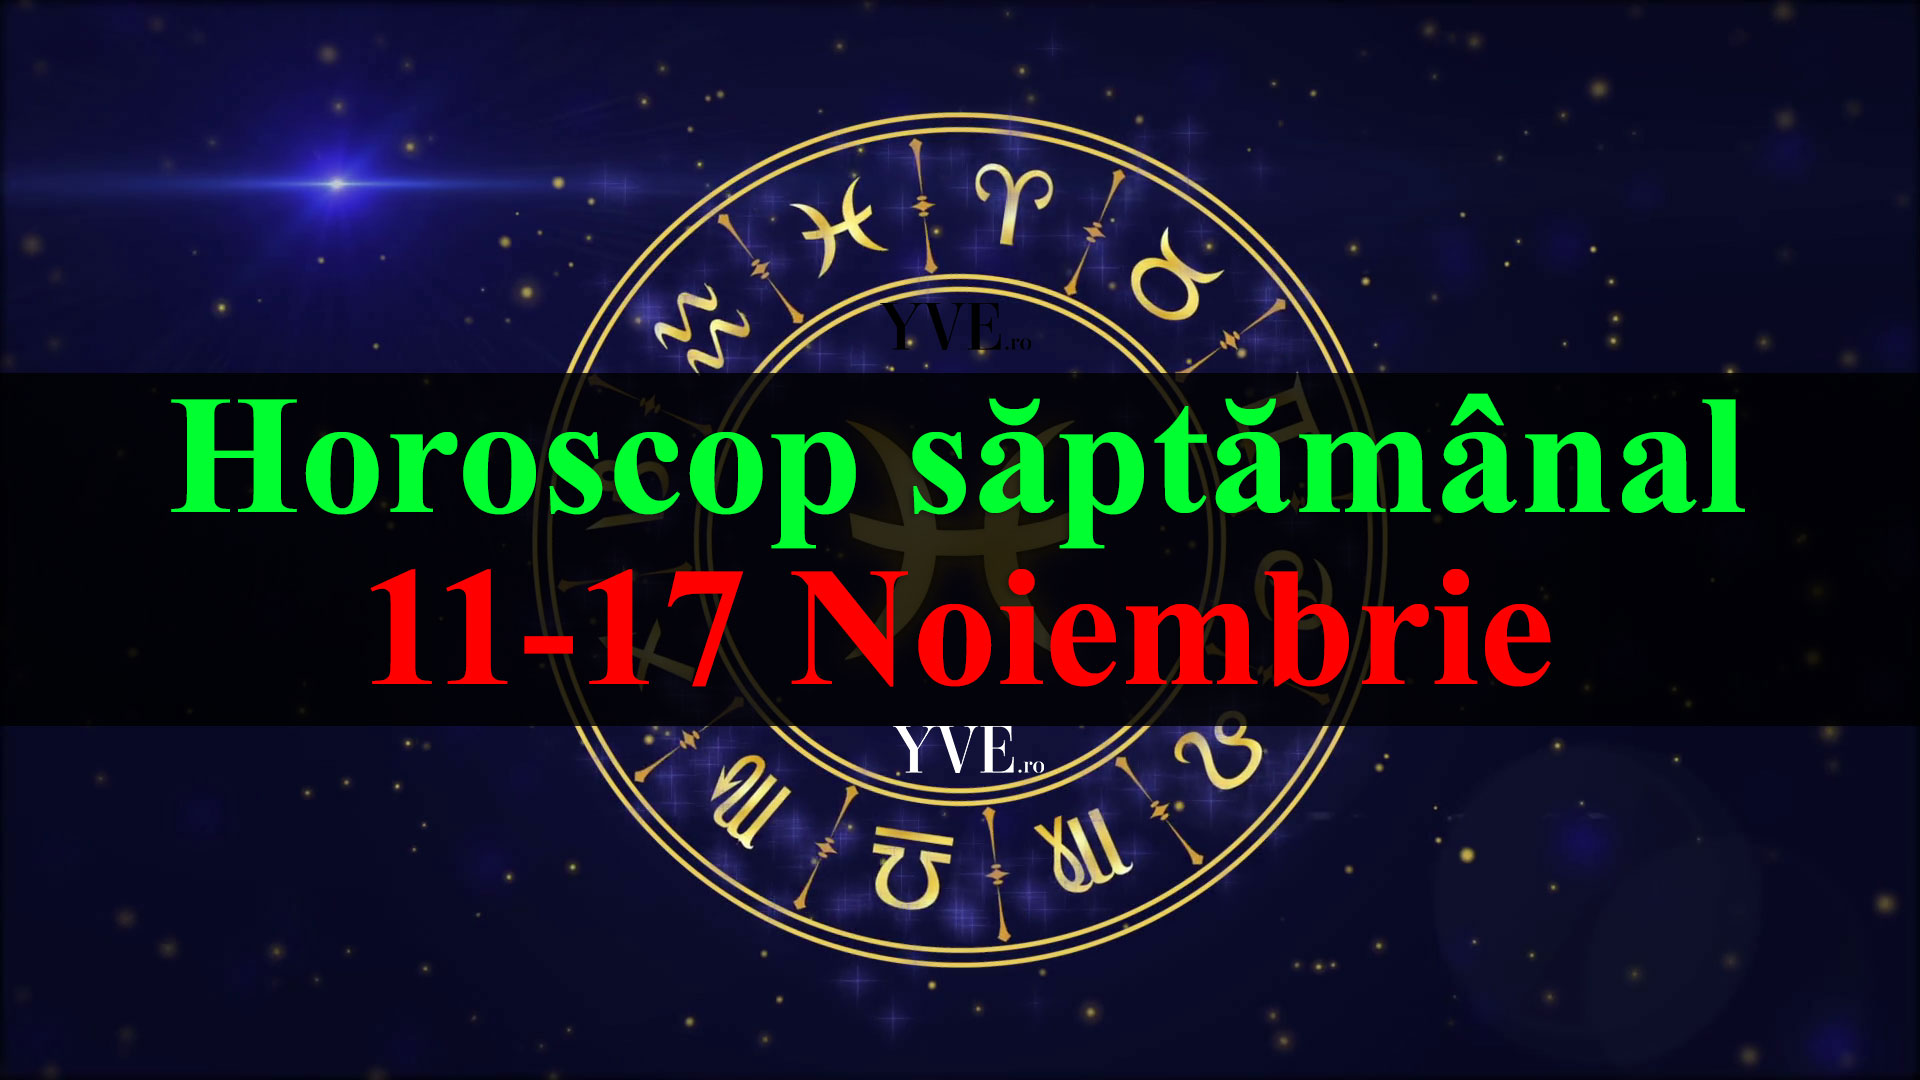 Horoscop saptamanal 11-17 Noiembrie 2019